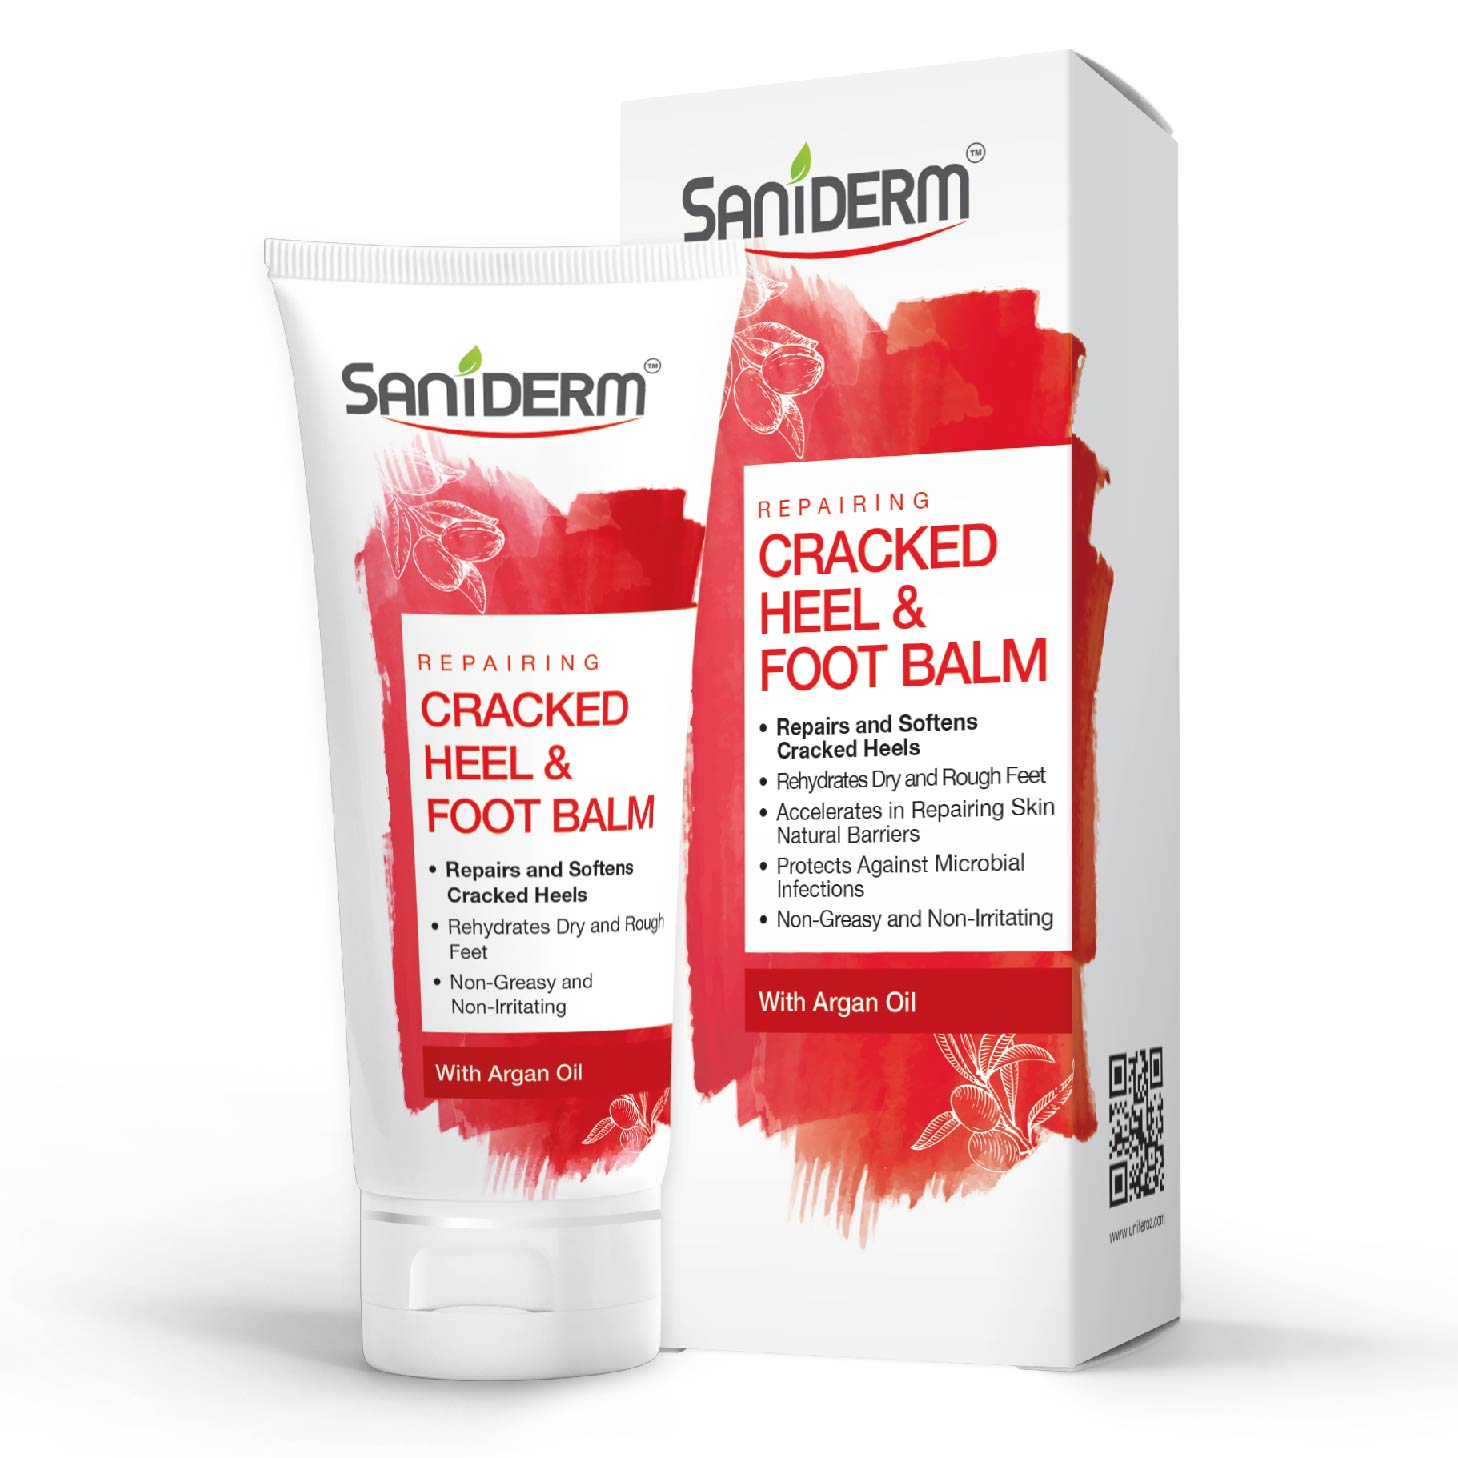 Bio Balance Cracked Heel & Foot Balm Argan Oil For Repairs, Softens,  Whitens | eBay